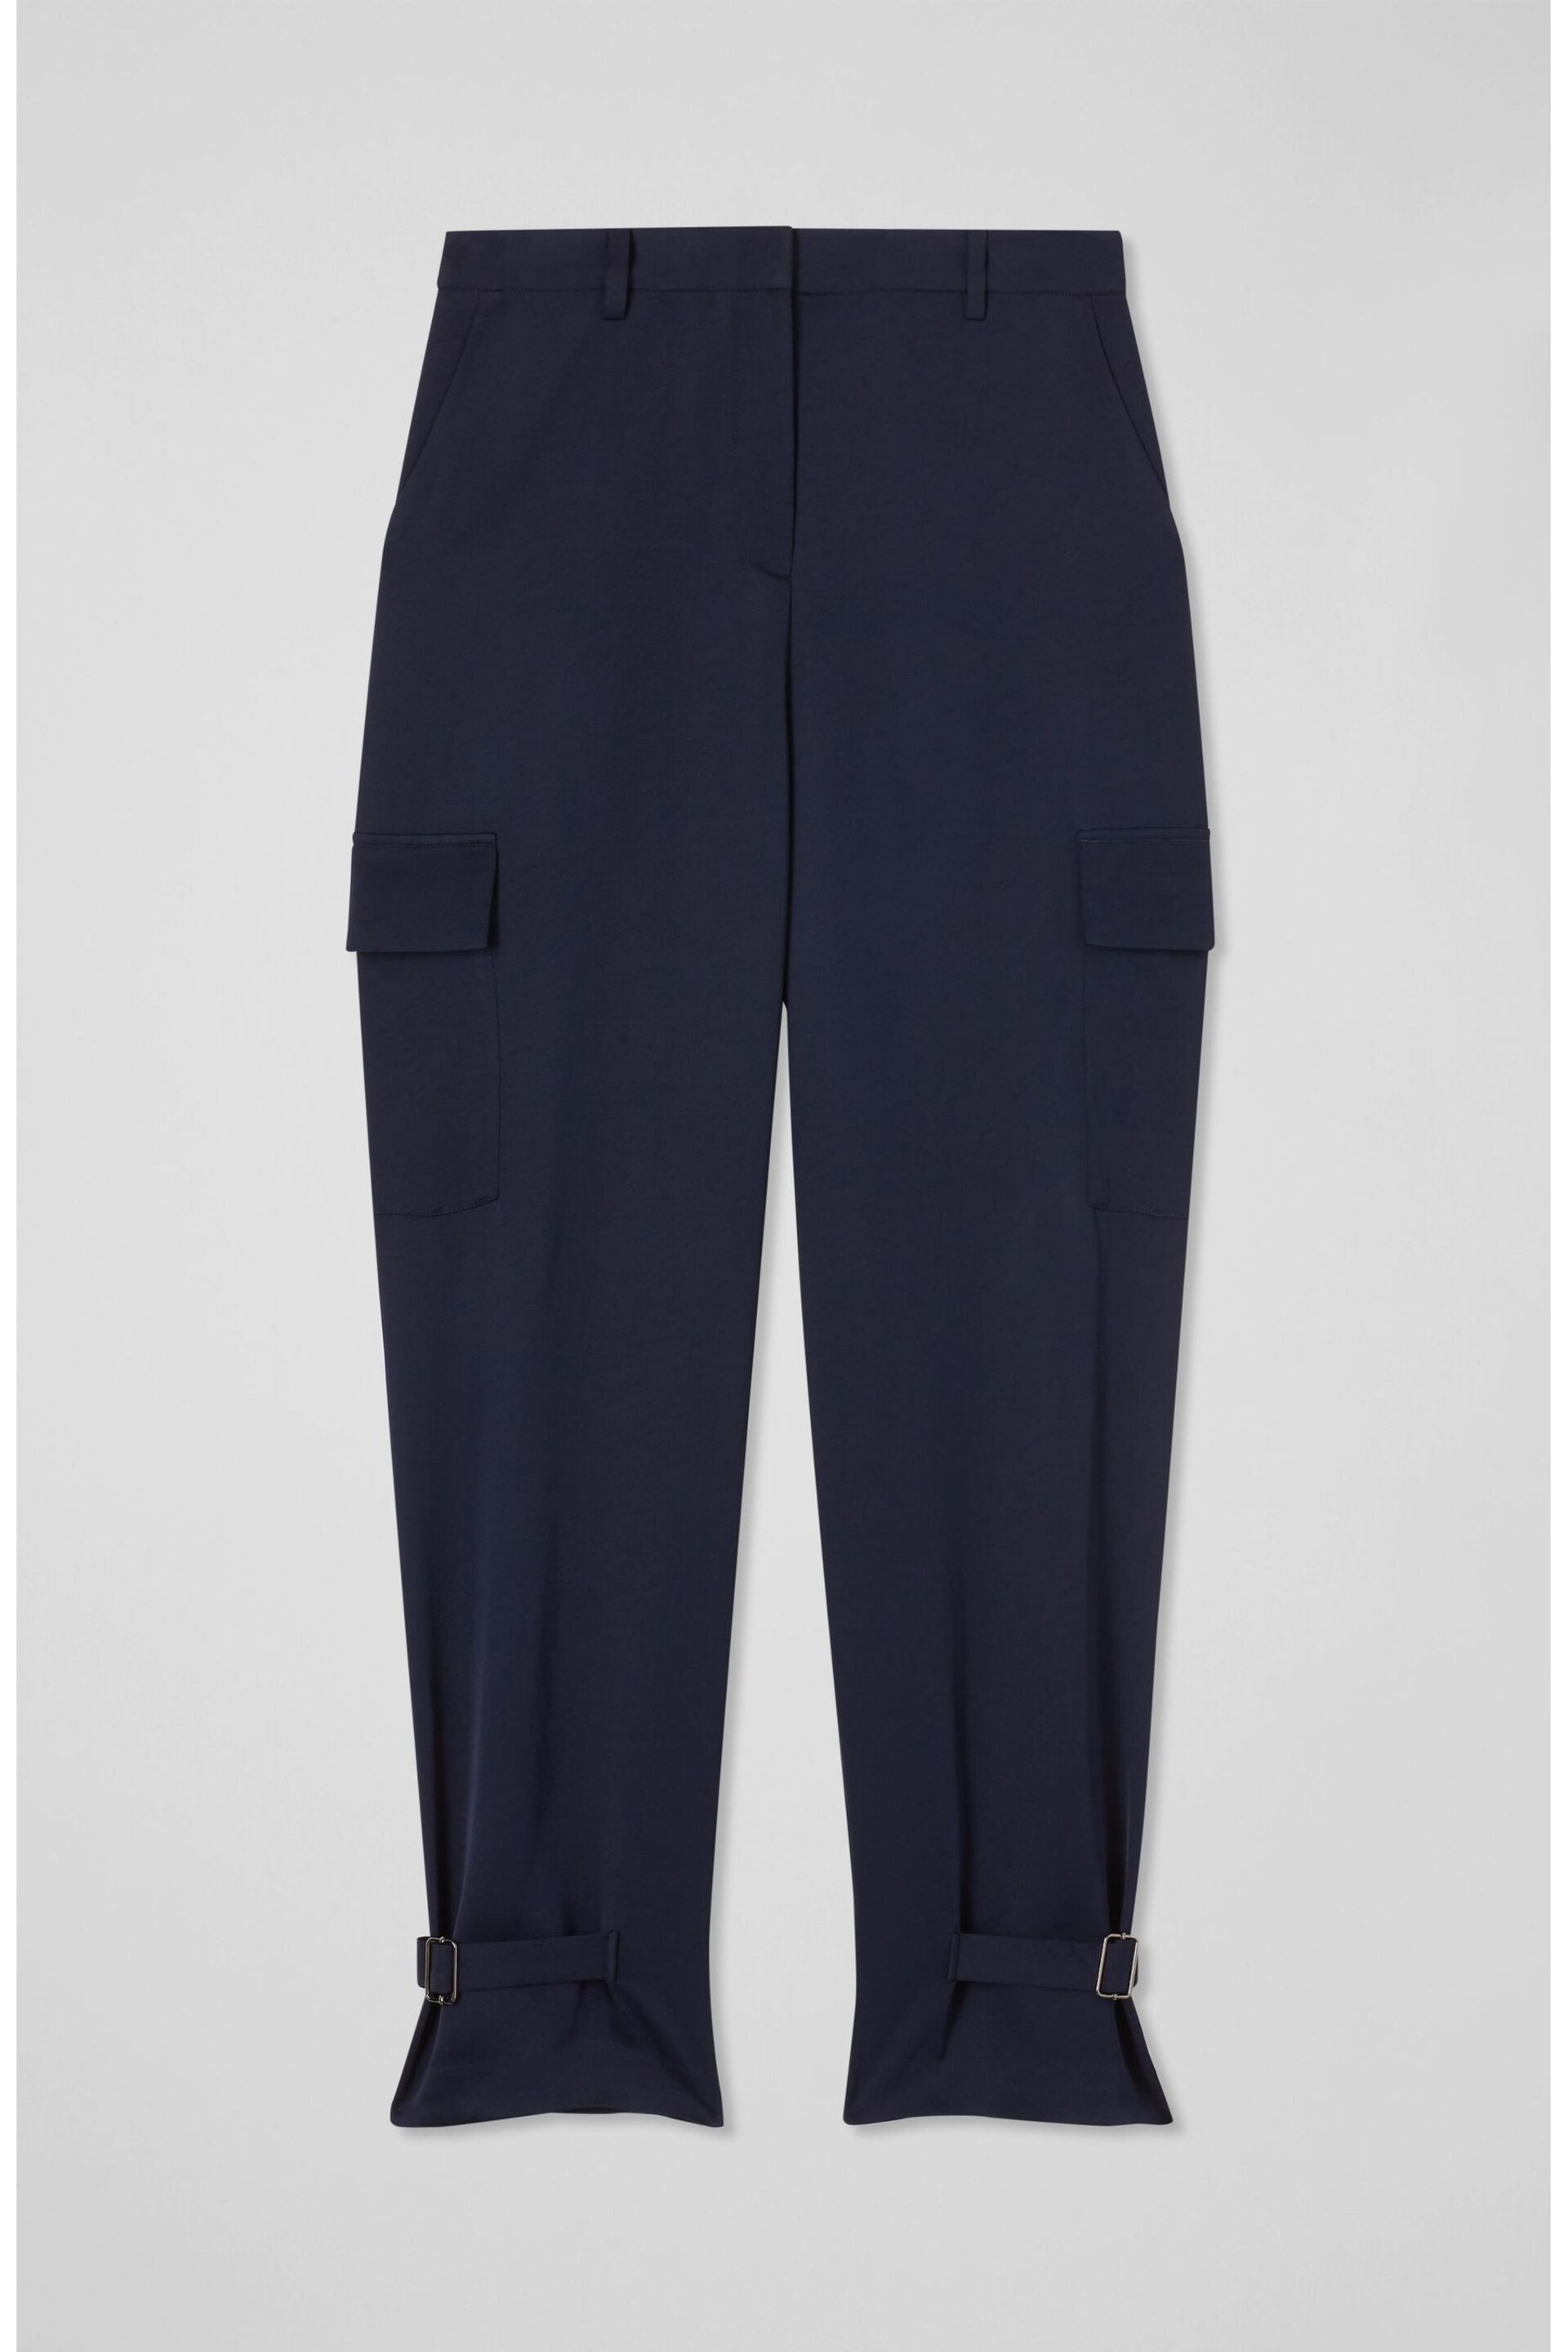 LK Bennett  Luna Viscose Utility Style Trousers - Image 3 of 3